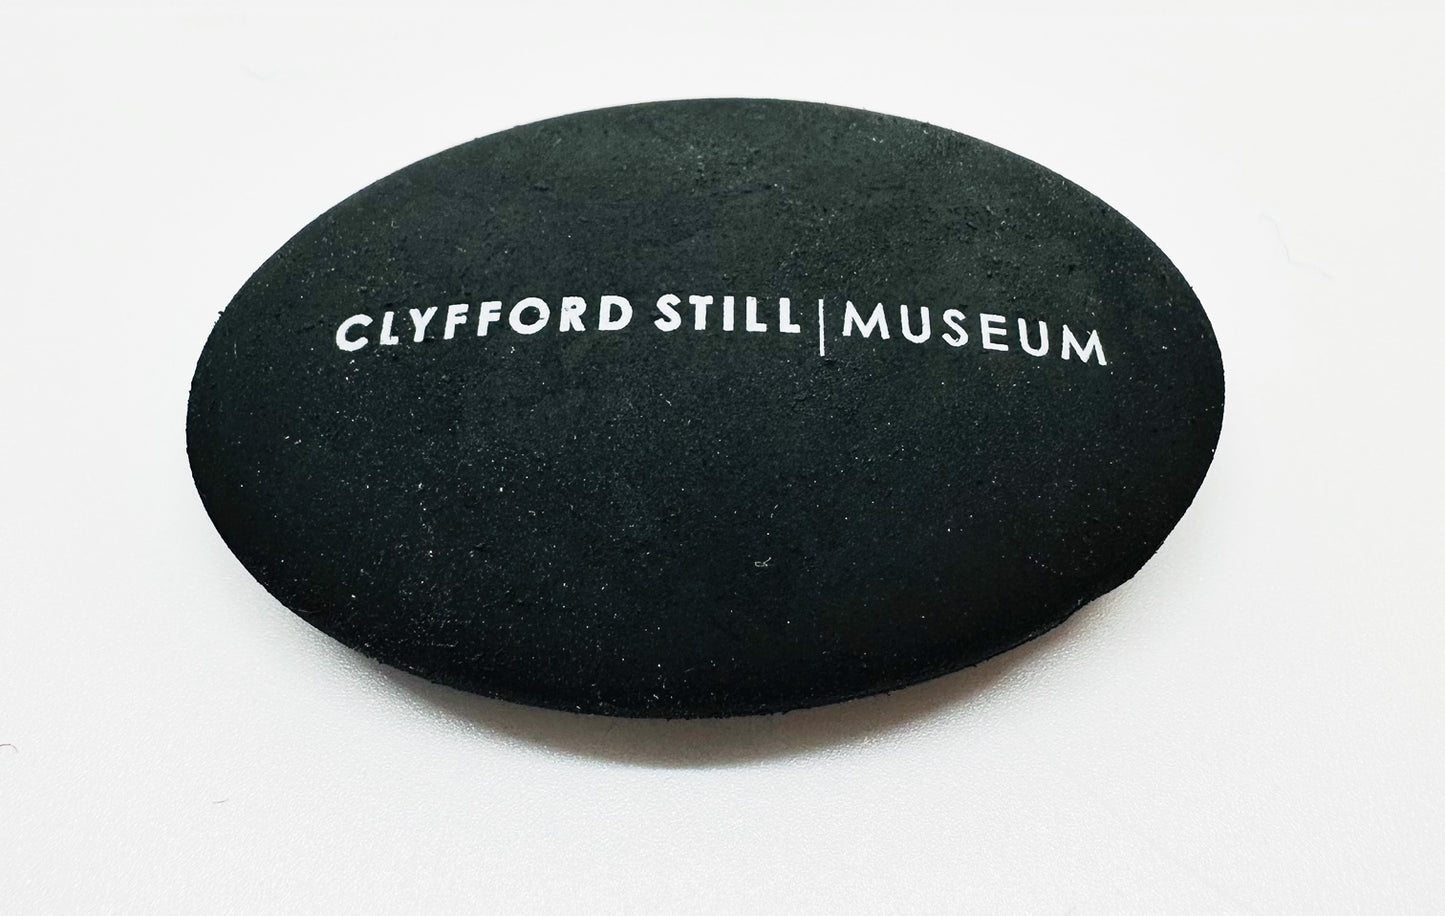 Black Pebble Eraser with Clyfford Still Museum logo.